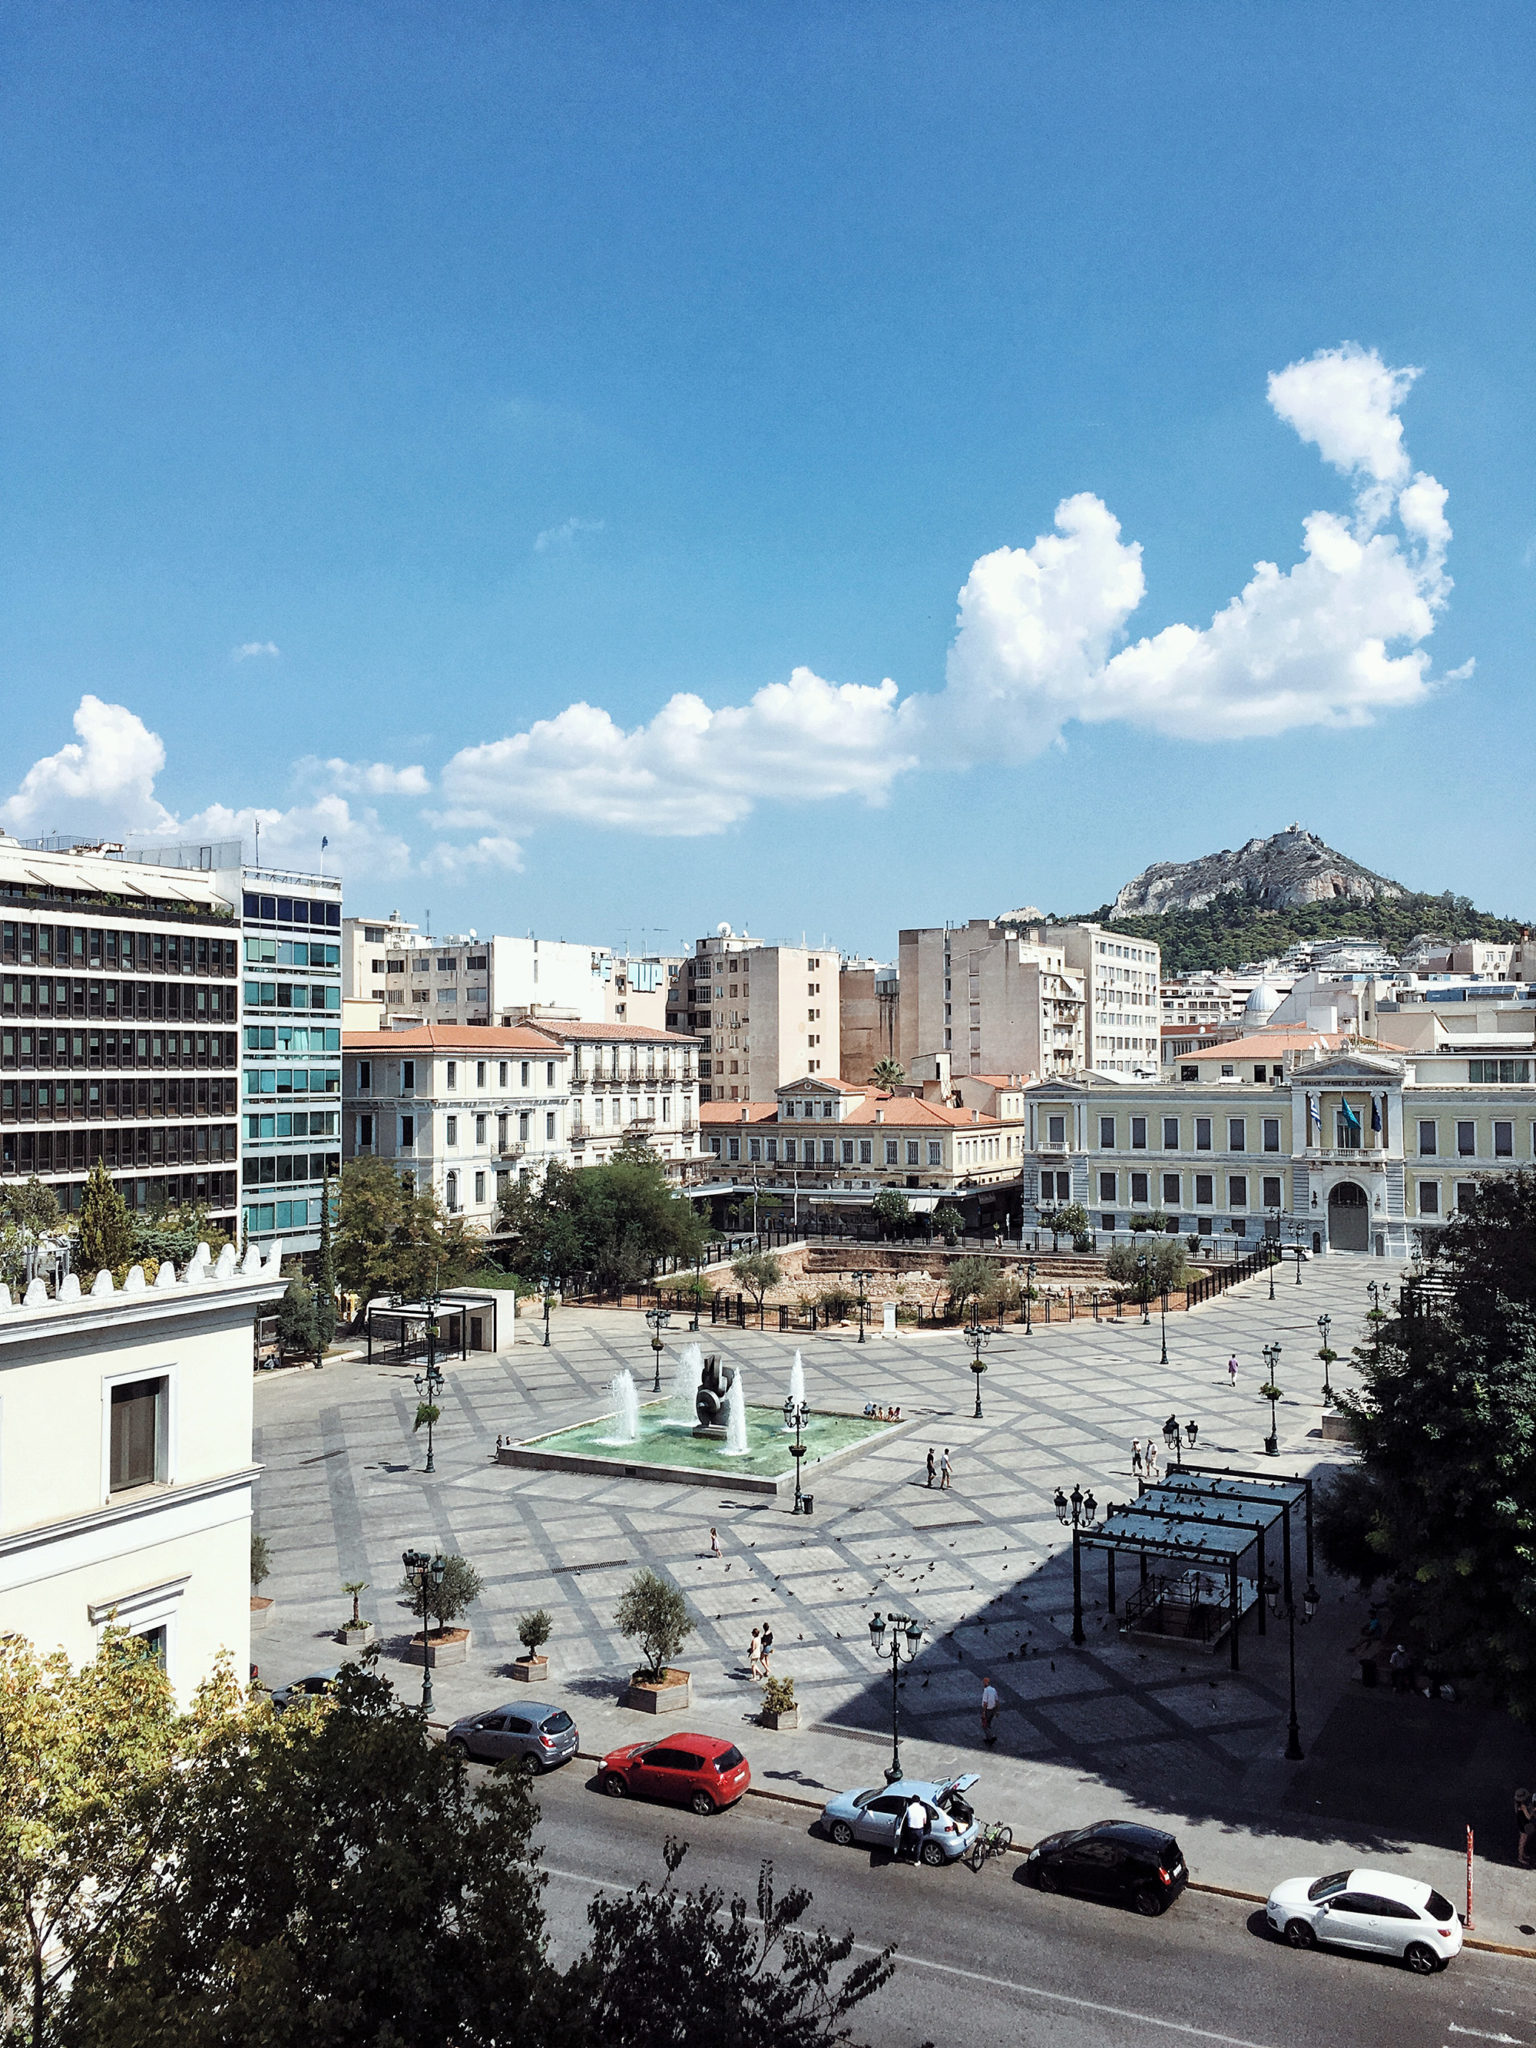 2 Day Itinerary of Athens - Monastiraki